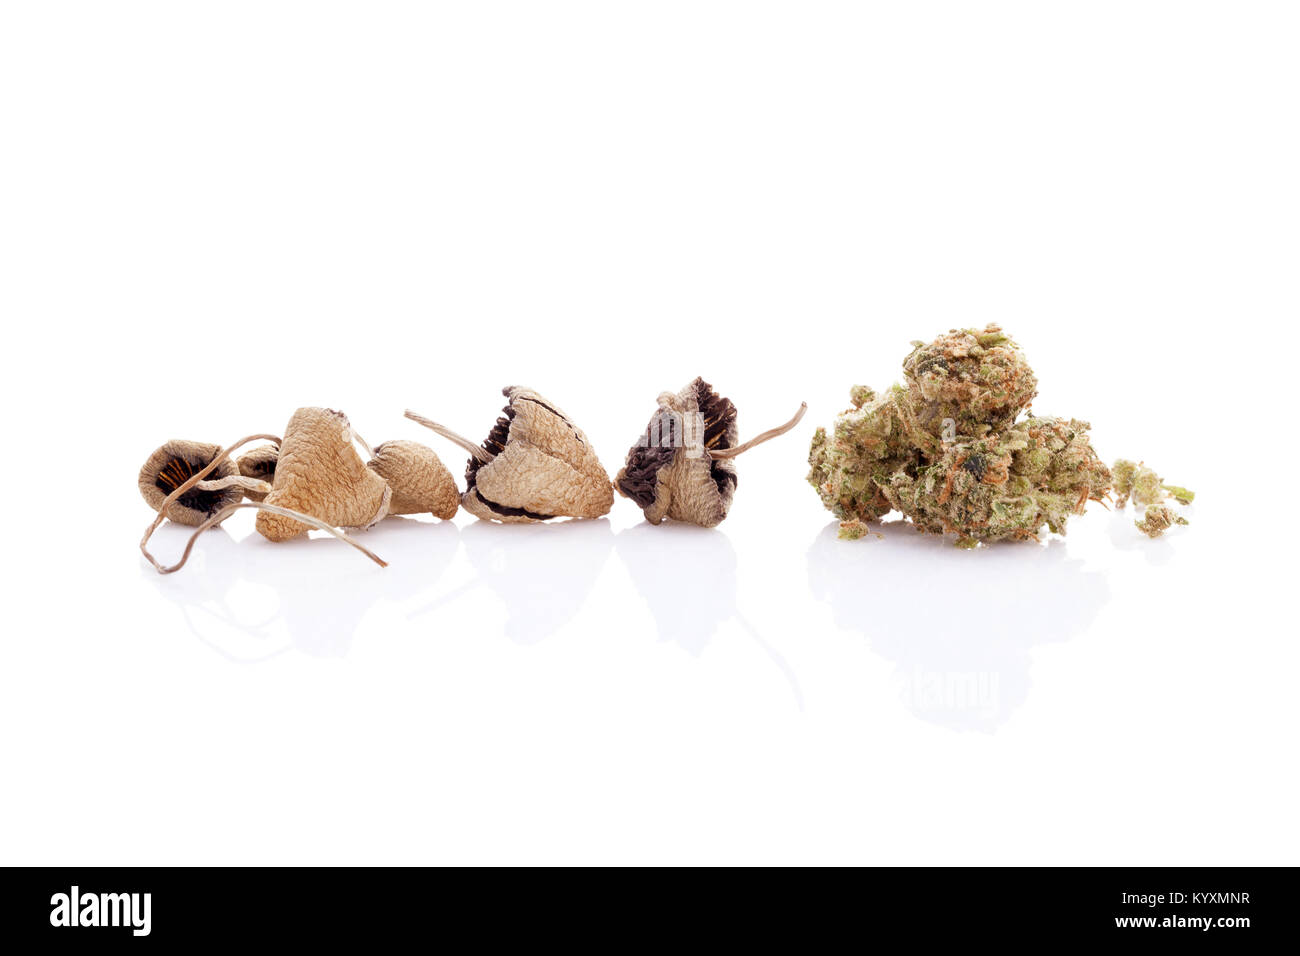 Dried magic mushrooms with bud marijuana cannabis plant. Isolated on white background. Stock Photo